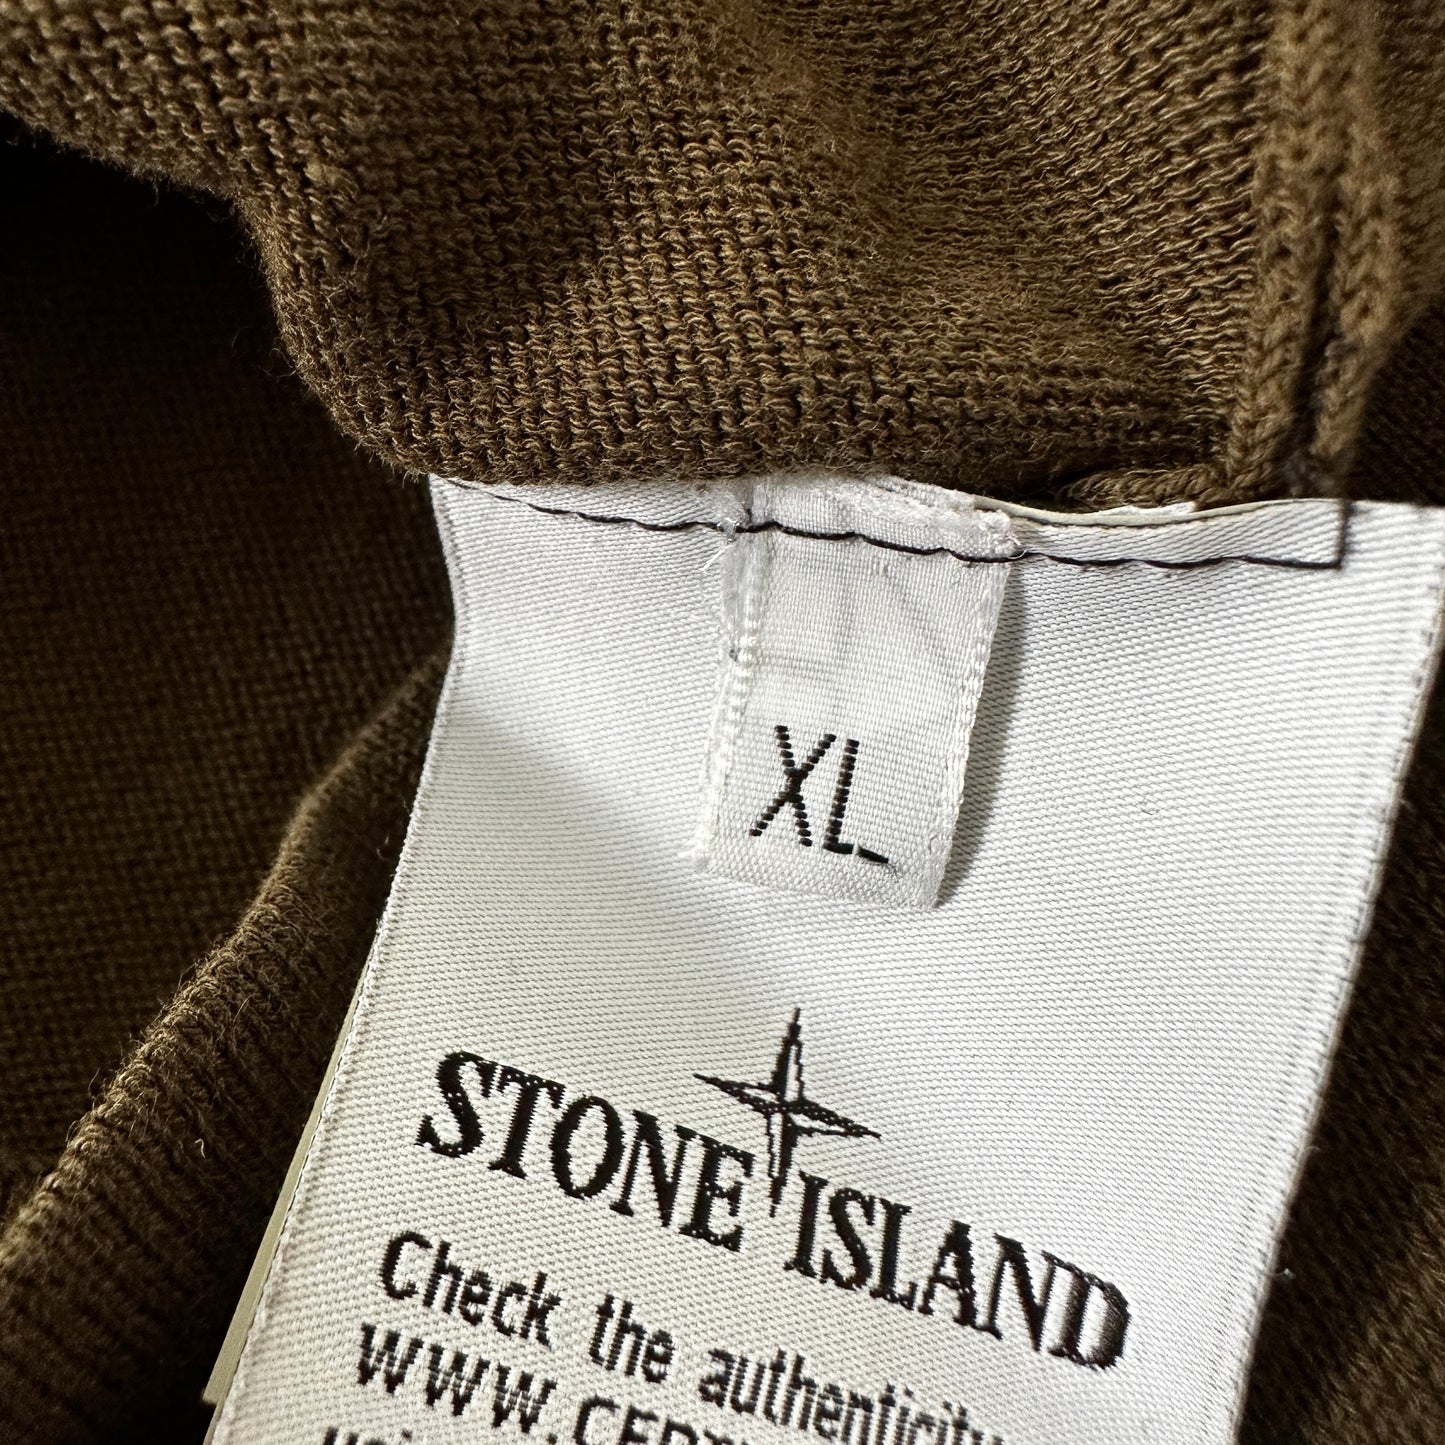 Stone Island Shadow Project 2017 Sweatshirt T-Shirt - XL - Made in Italy